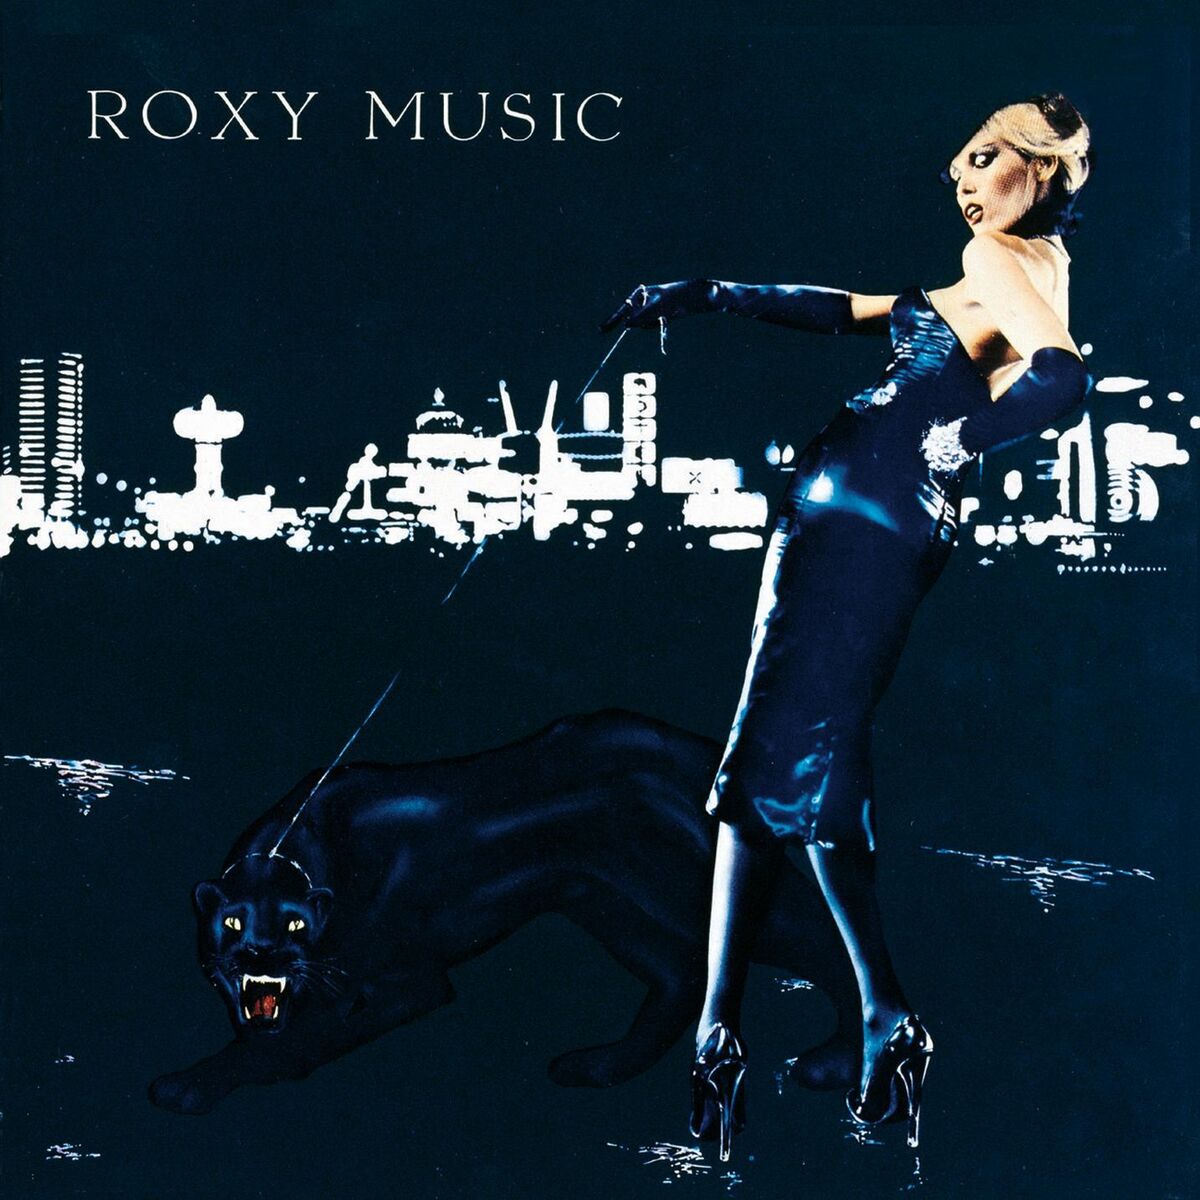 Roxy Music: albums, songs, playlists | Listen on Deezer